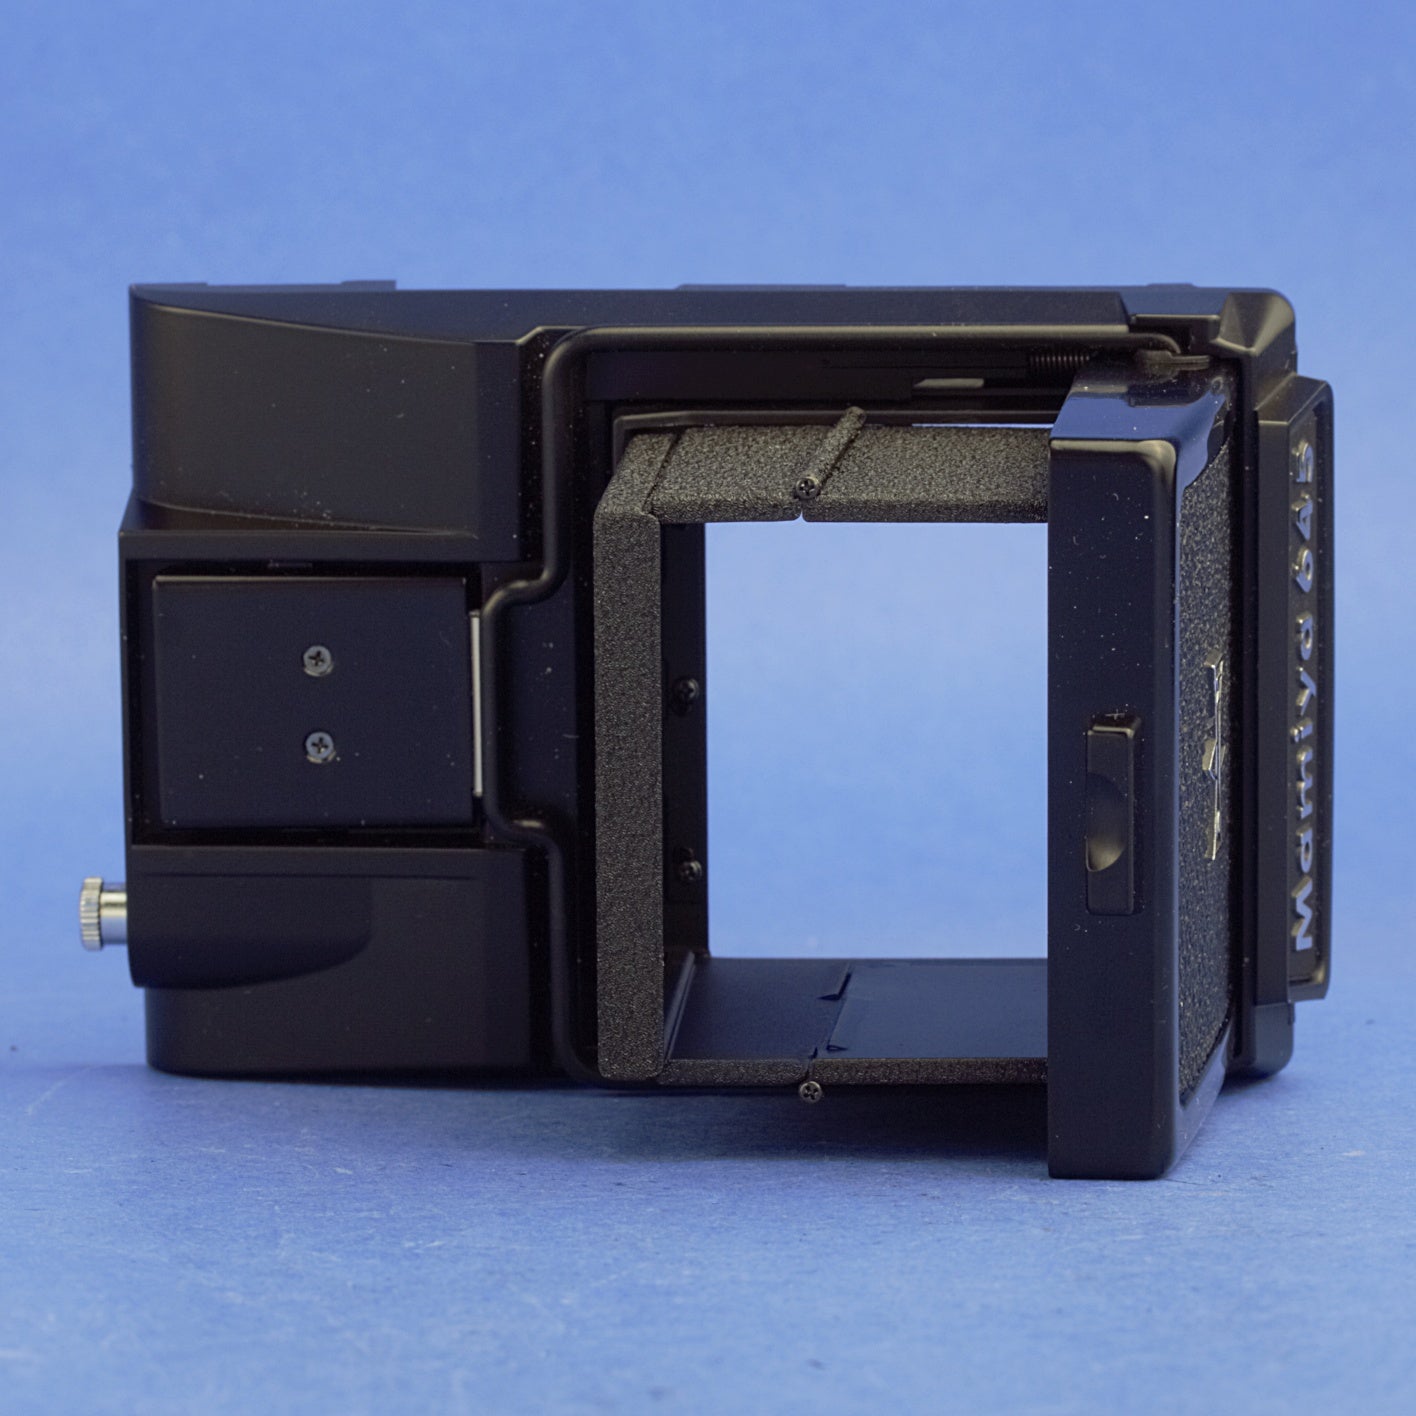 Mamiya Waist Level Finder for M645, 1000S Cameras Near Mint Condition